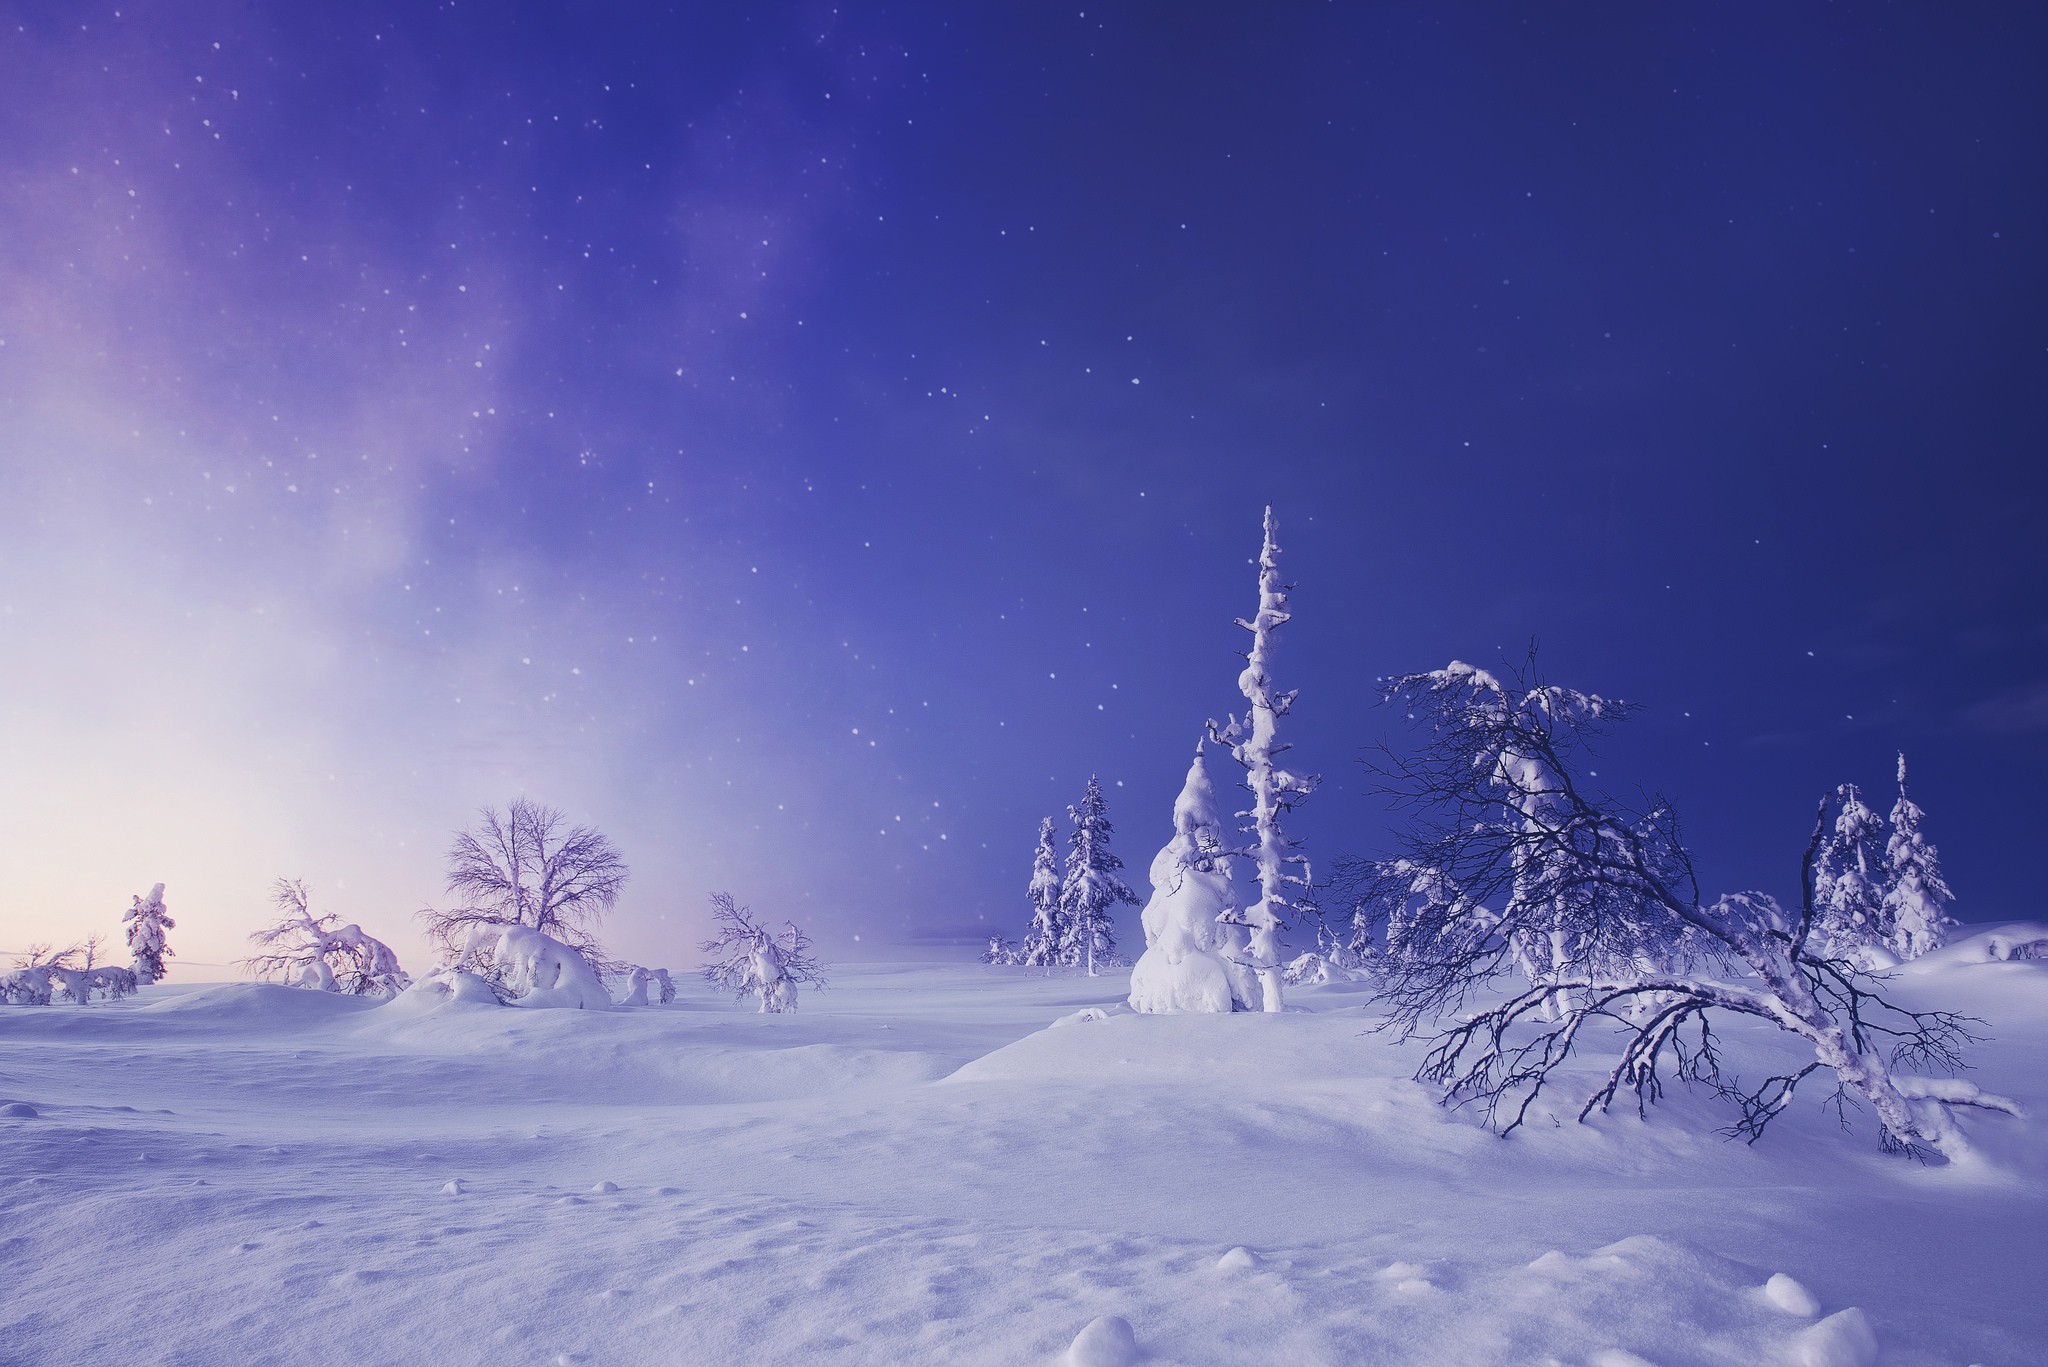 General 2048x1367 landscape snow nature winter violet stars